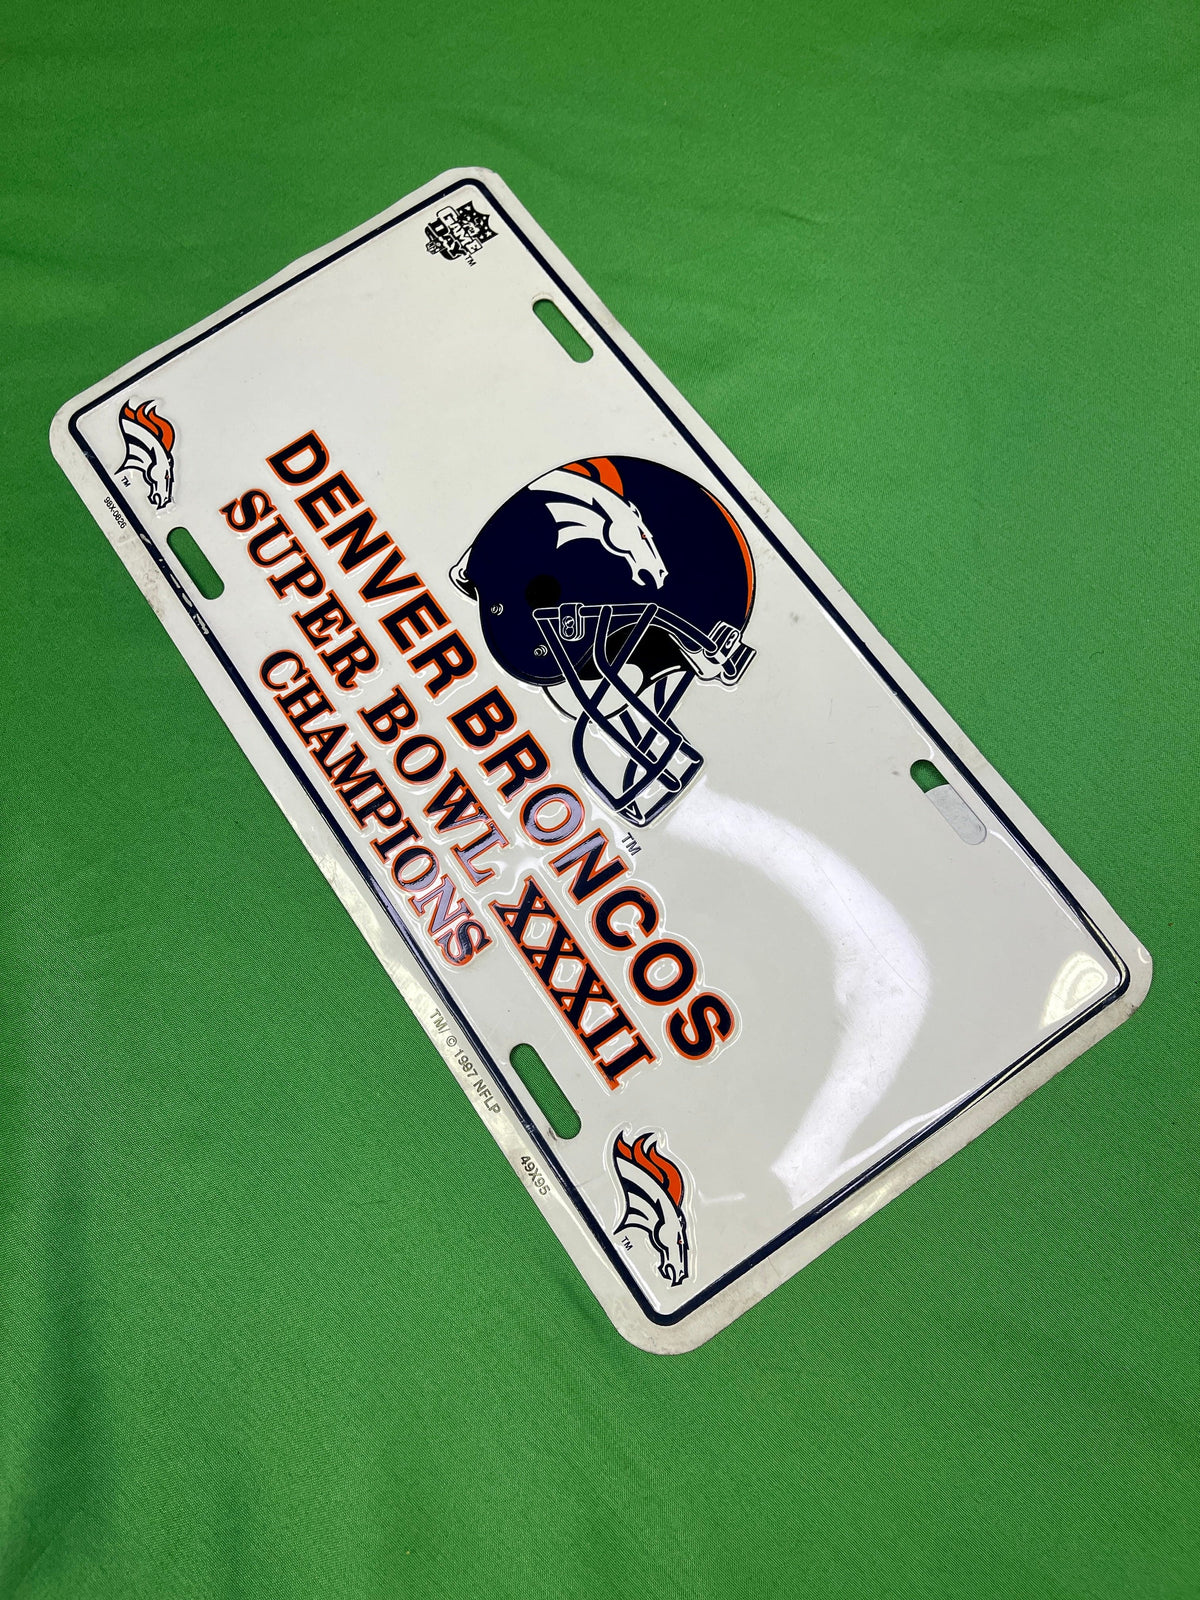 NFL Denver Broncos Decorative Metal License Number Plate Super Bowl XXXII Champions